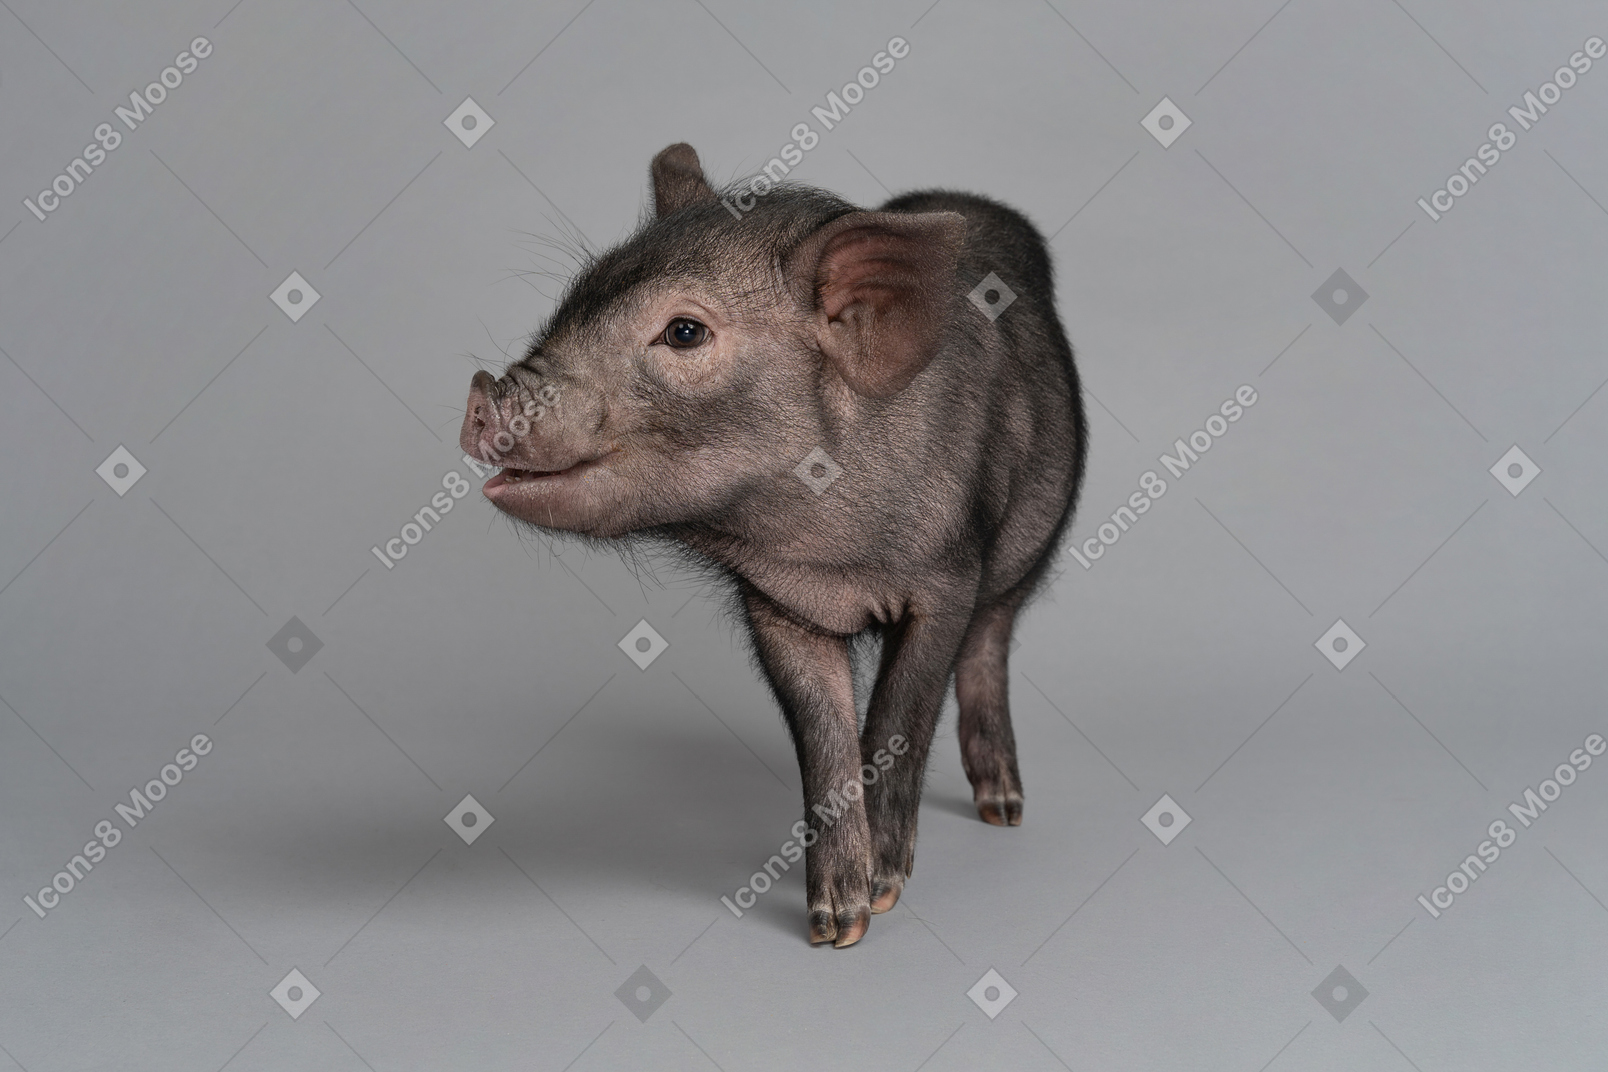 Miniature pig showing itself